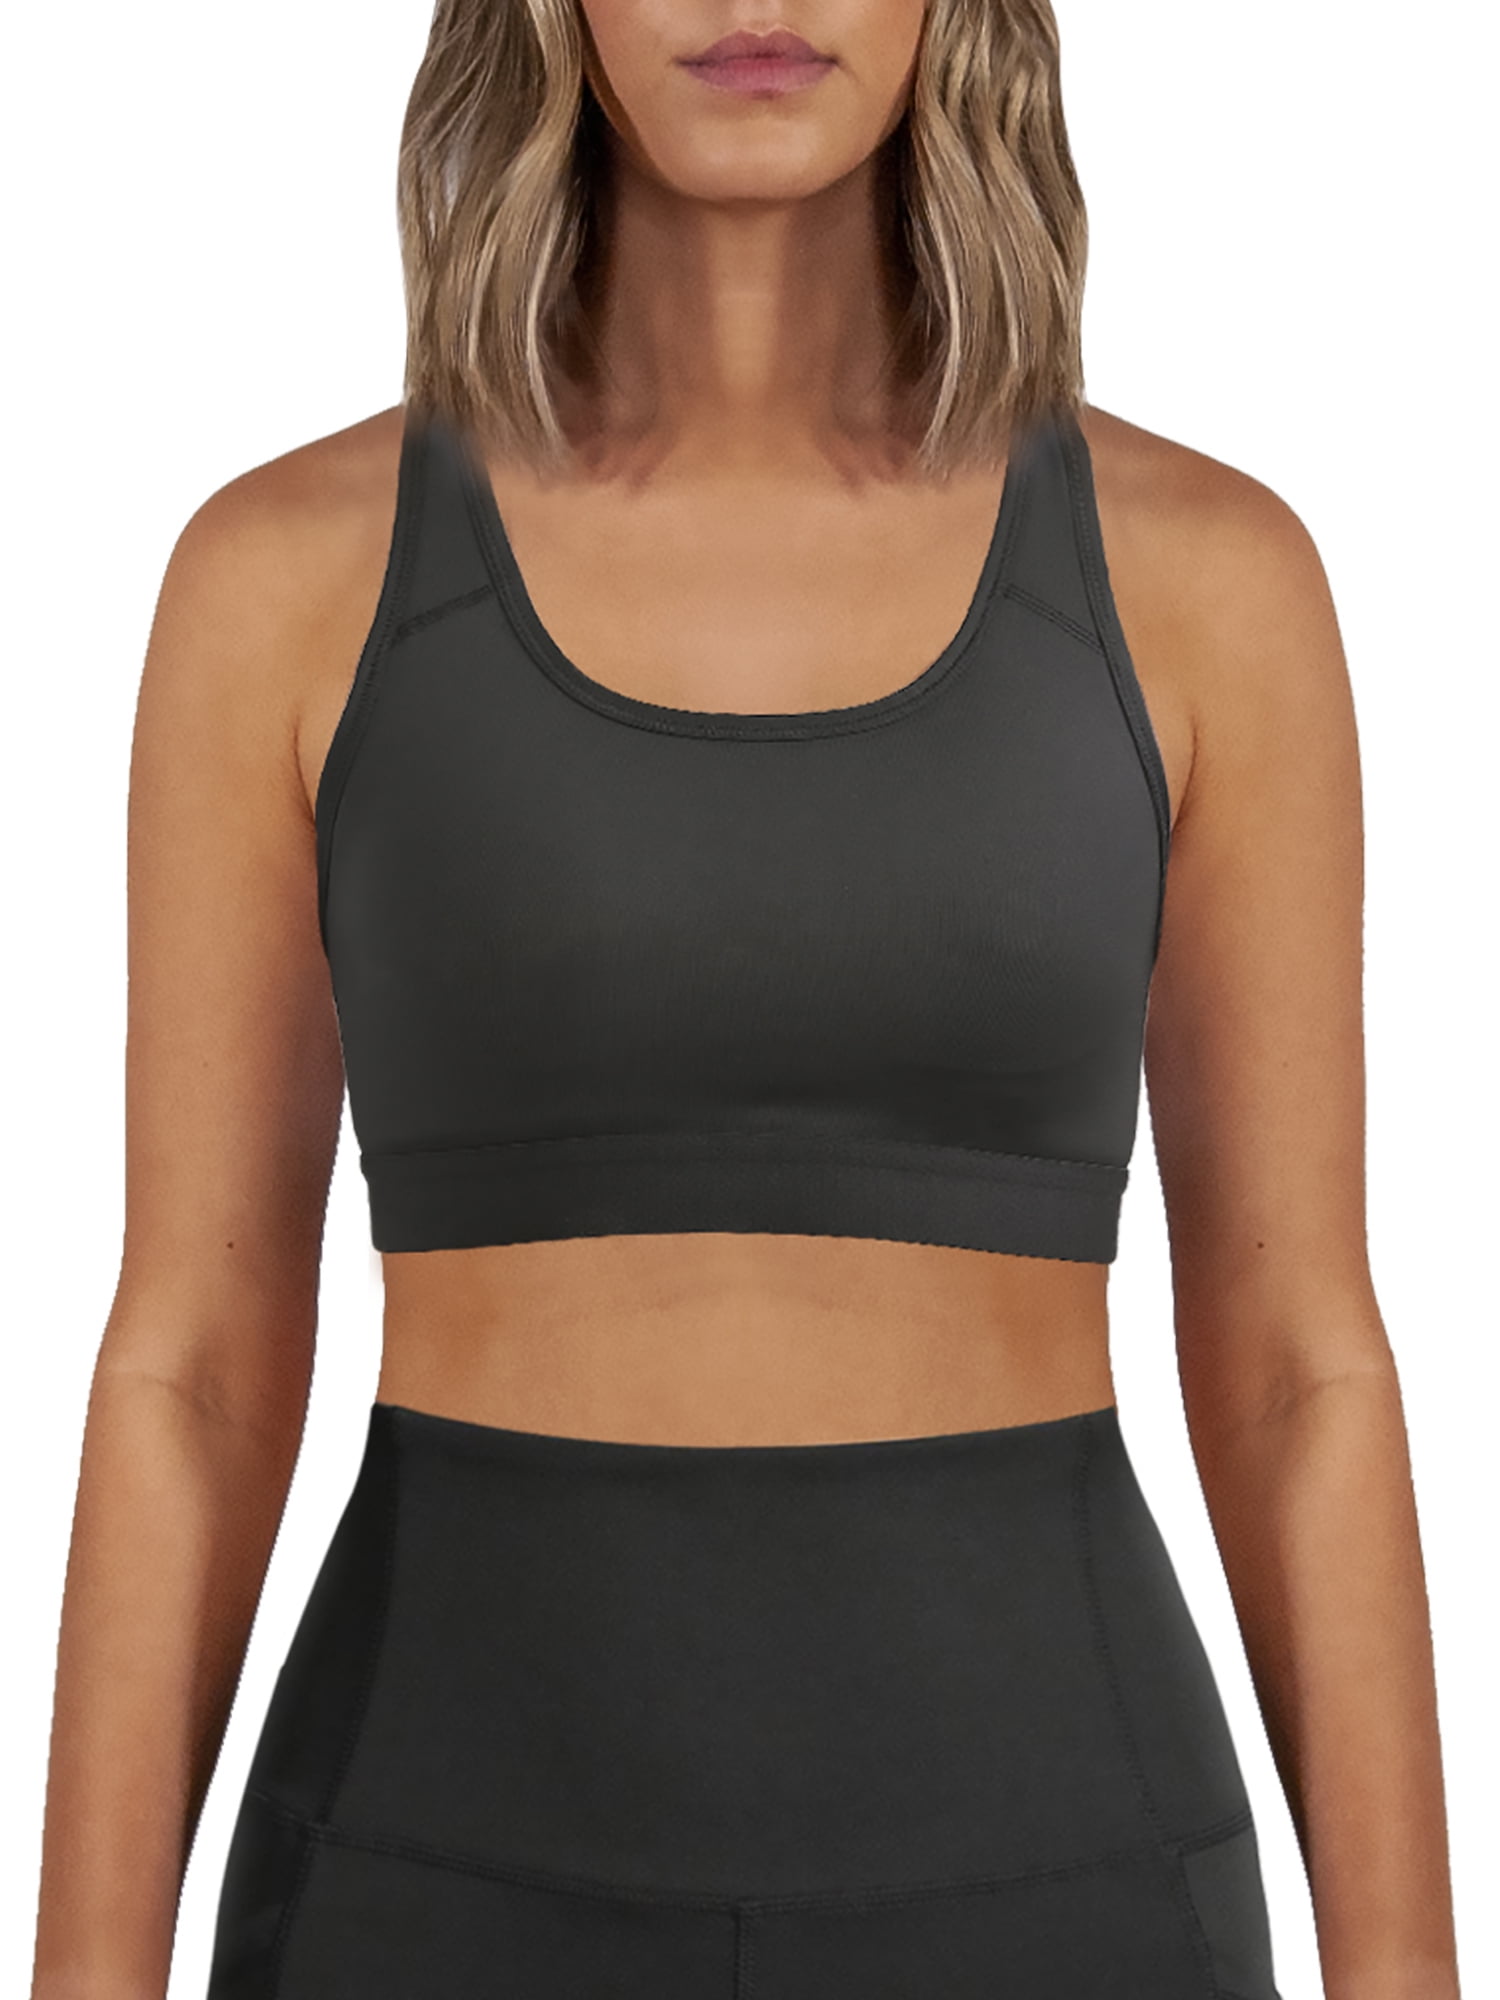 Avia grey black digital racerback sports bra. Size Medium Womens - $9 -  From Hannah